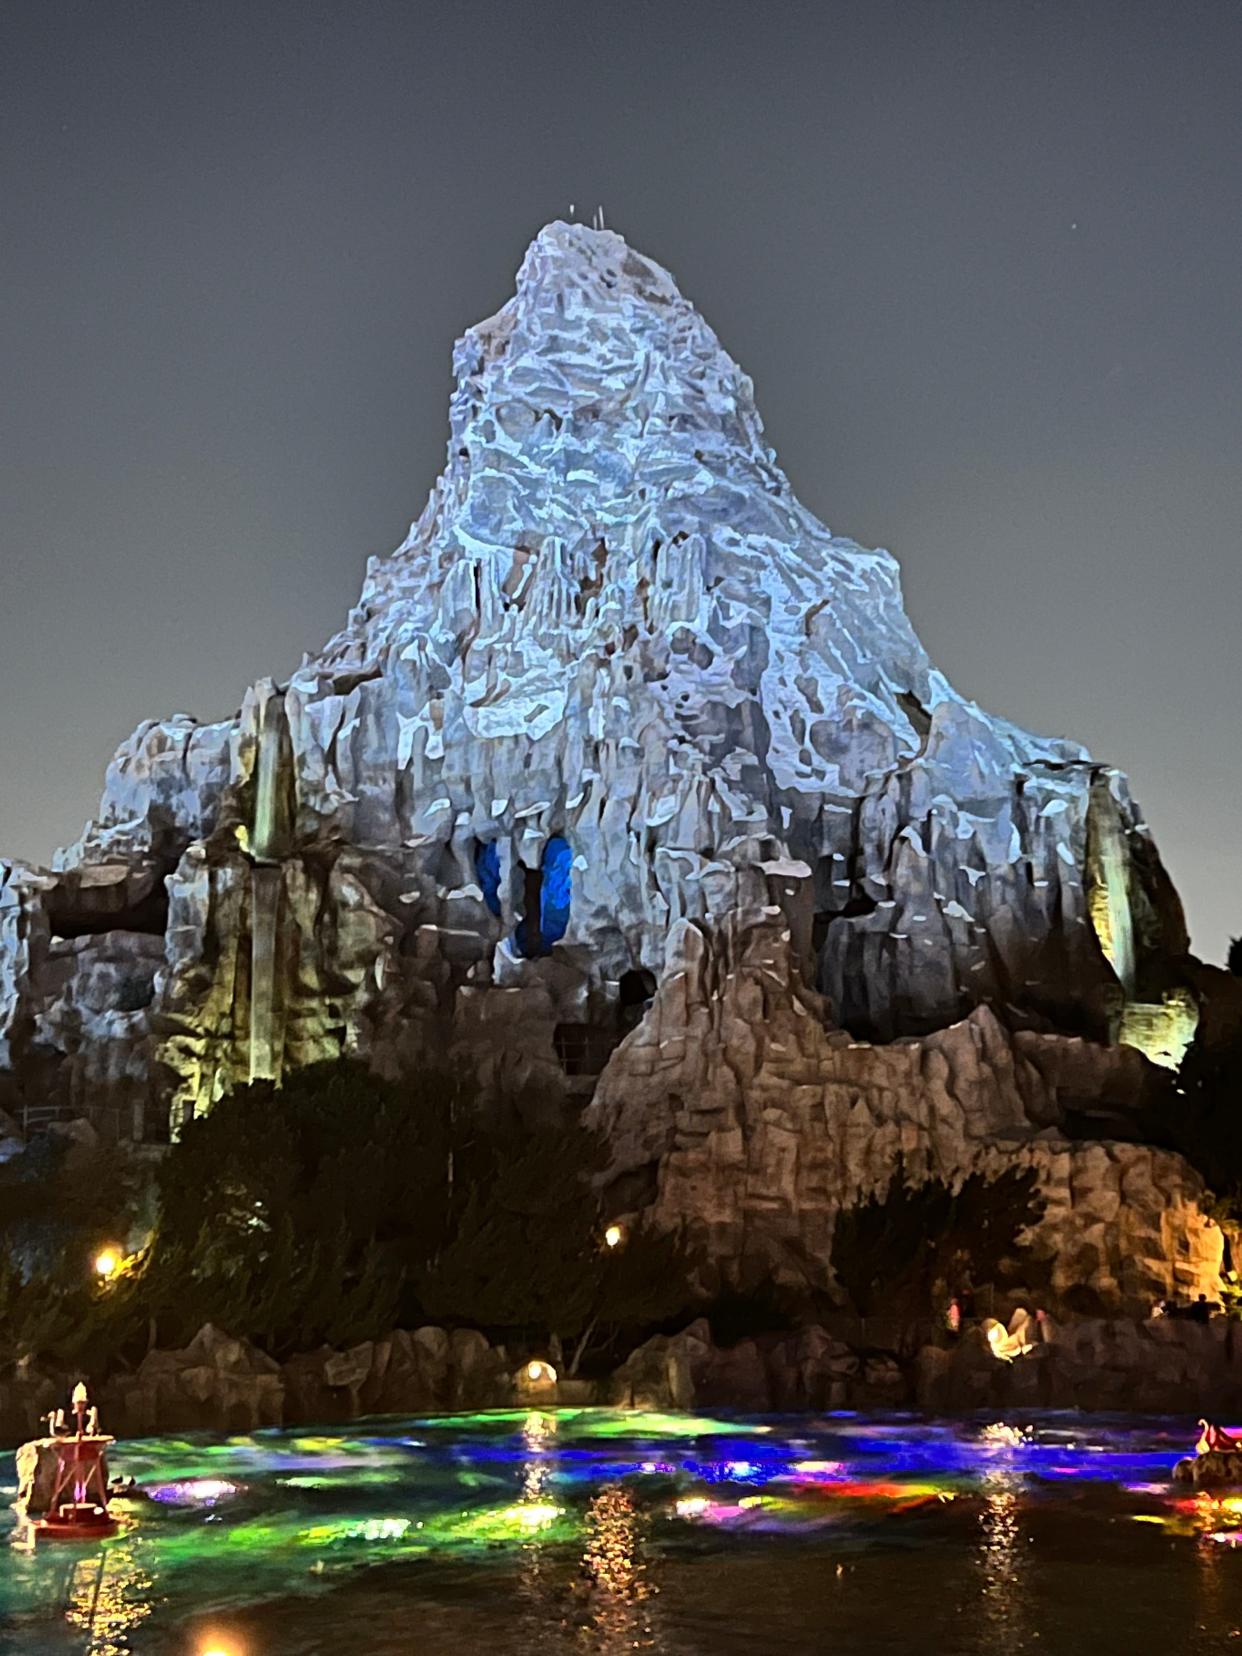 The Matterhorn rises above Finding Nemo Submarine Voyage at Disneyland Park.